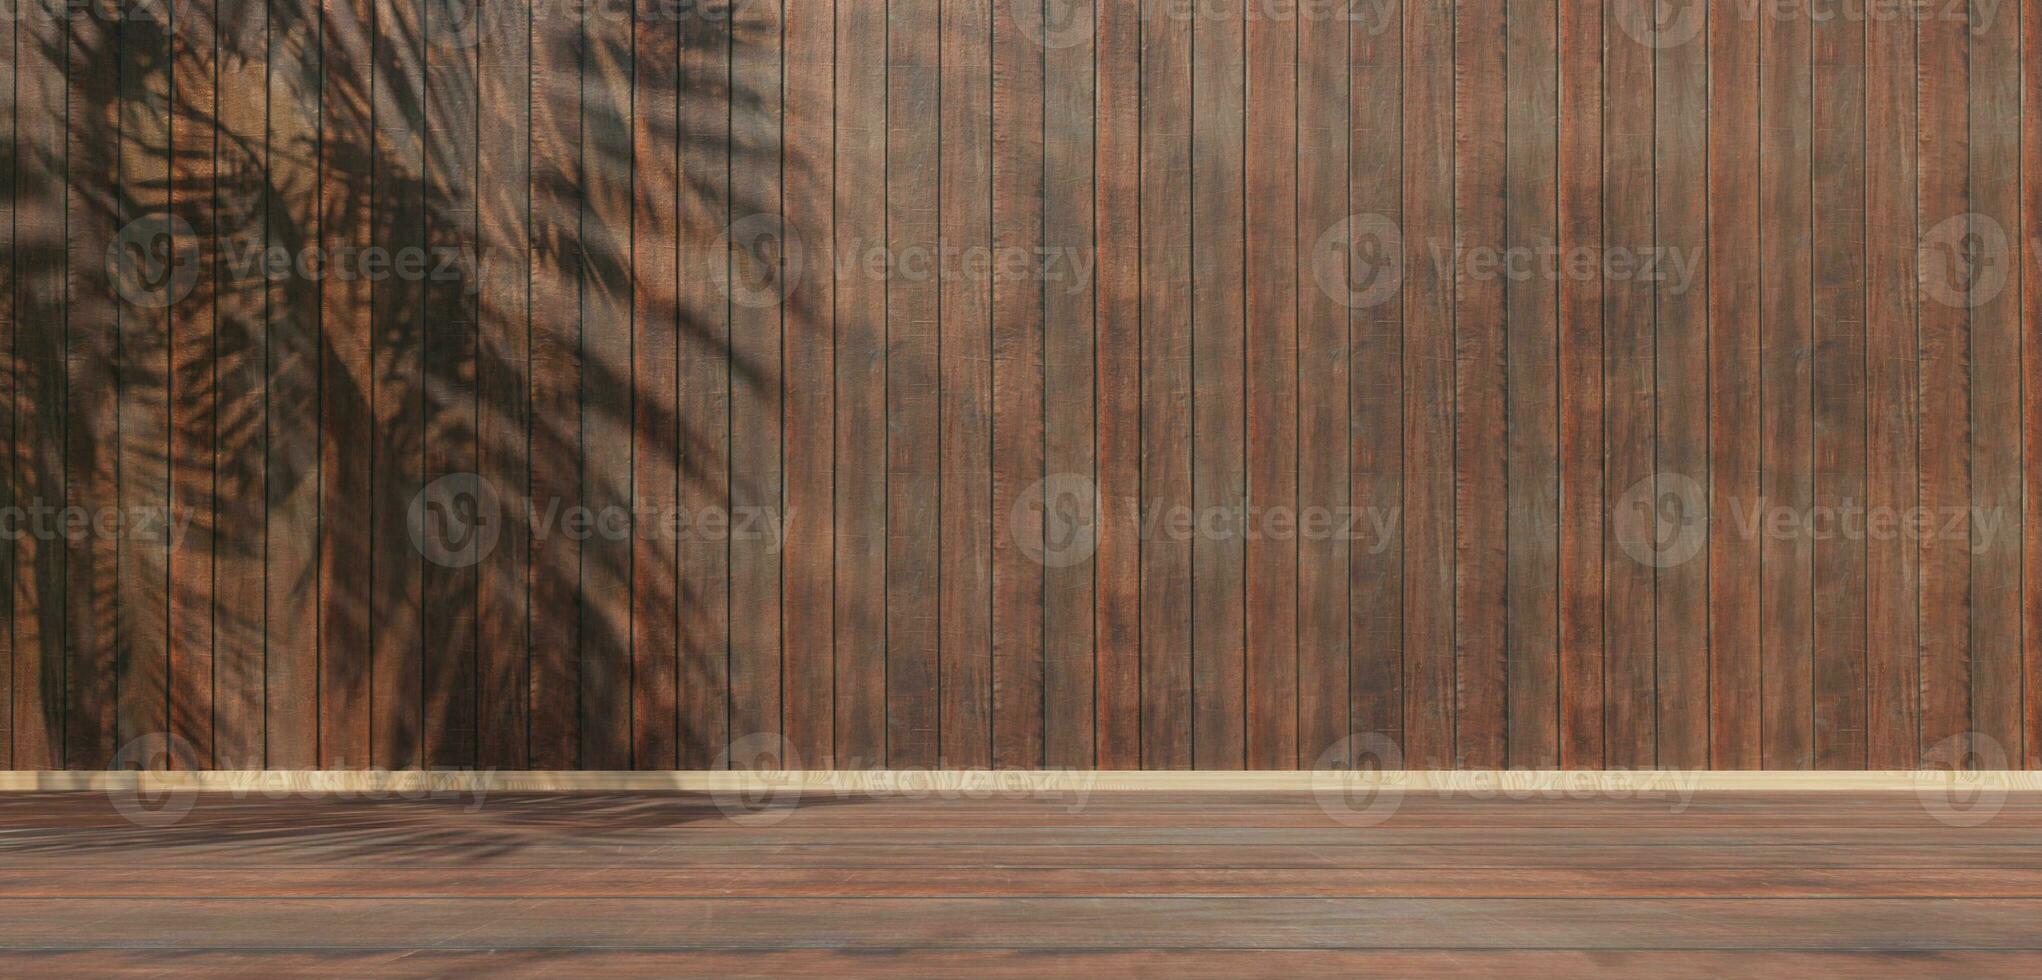 background wood scene wood grain wood floor wood wall grunge 3d illustration photo